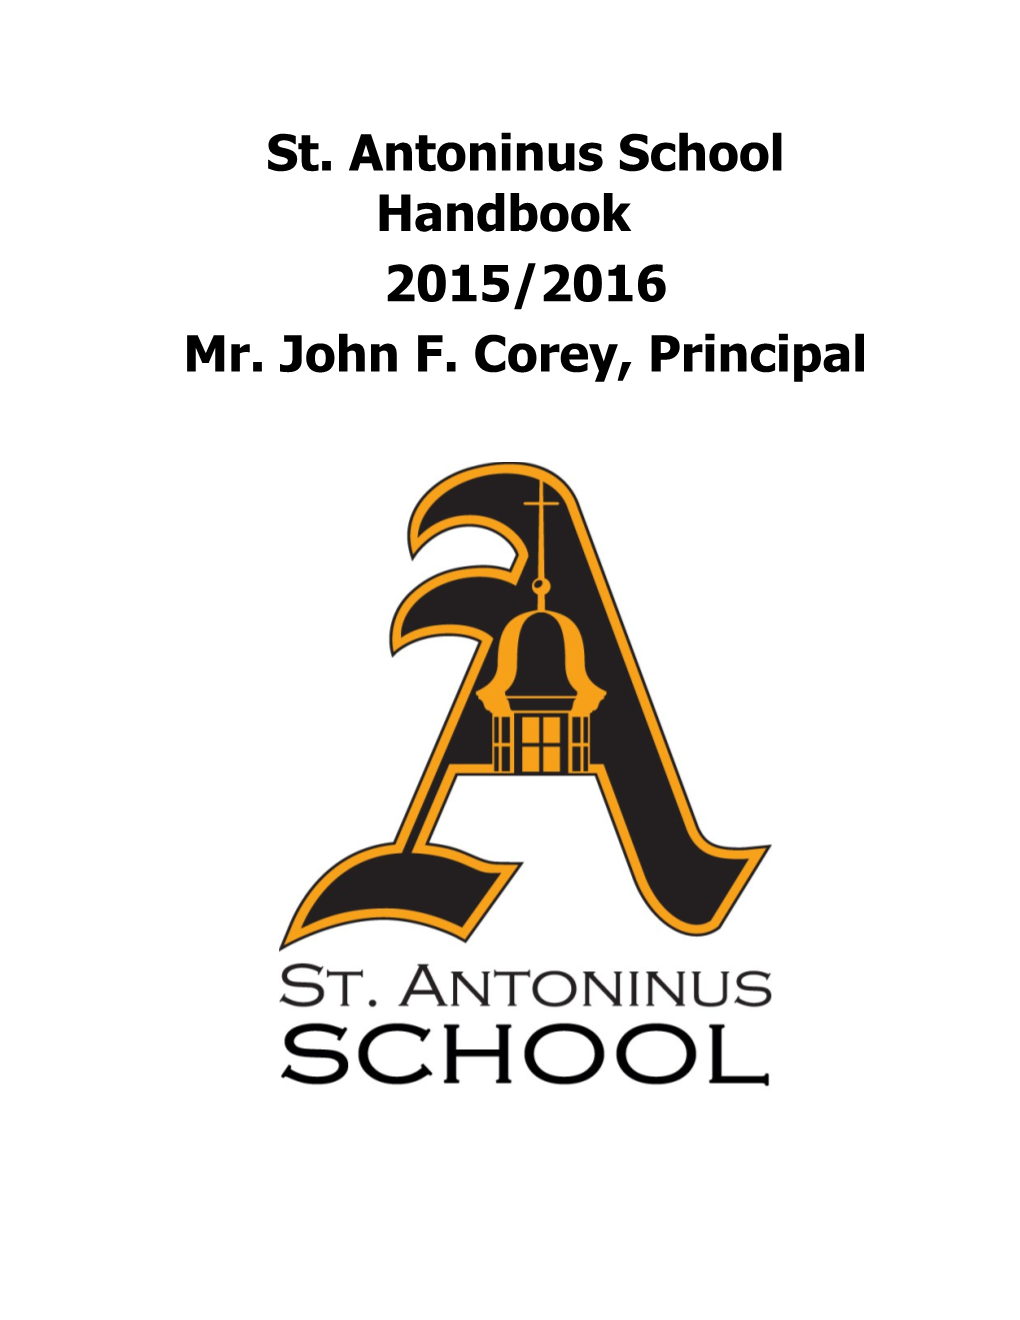 St. Antoninus School Handbook